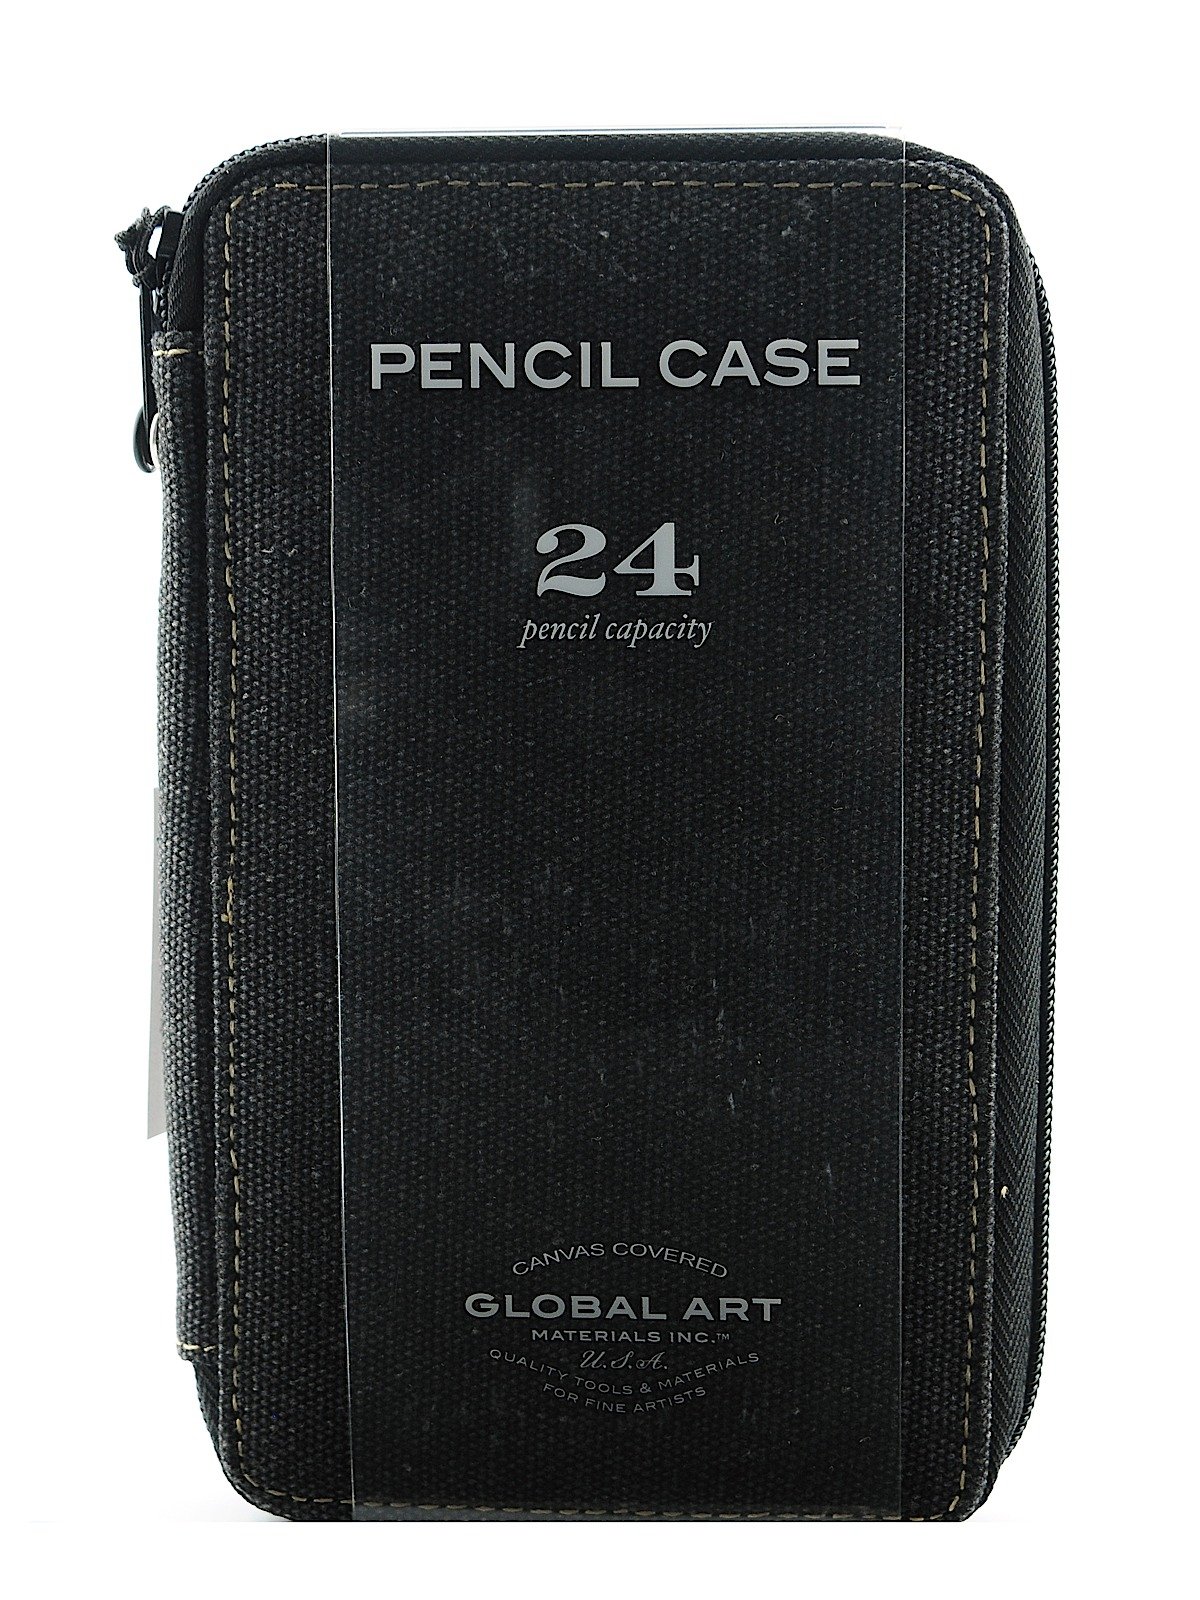 Global Art Pencil Case, Woven Canvas, Sage, 24 Pencils - The Art